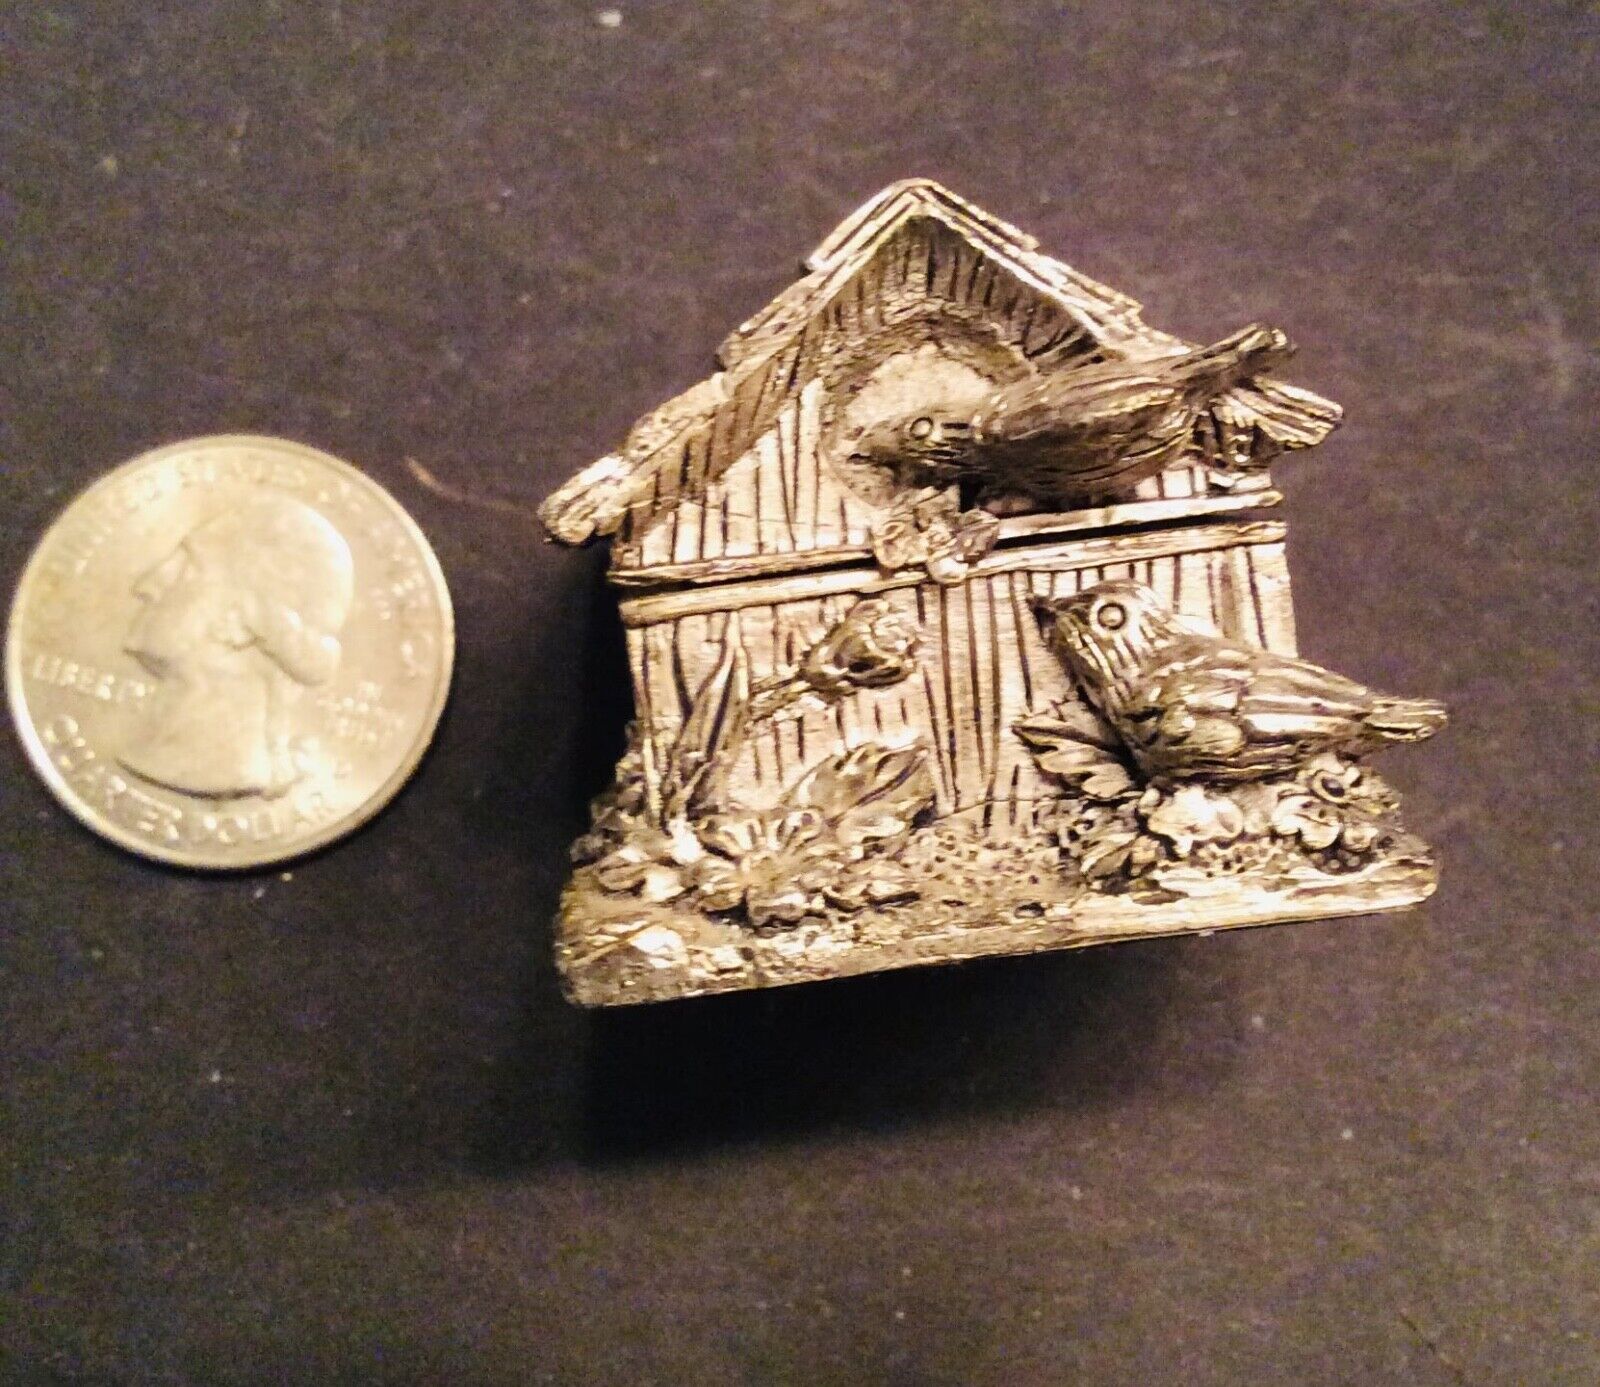 Too cute  Little bird house trinket box